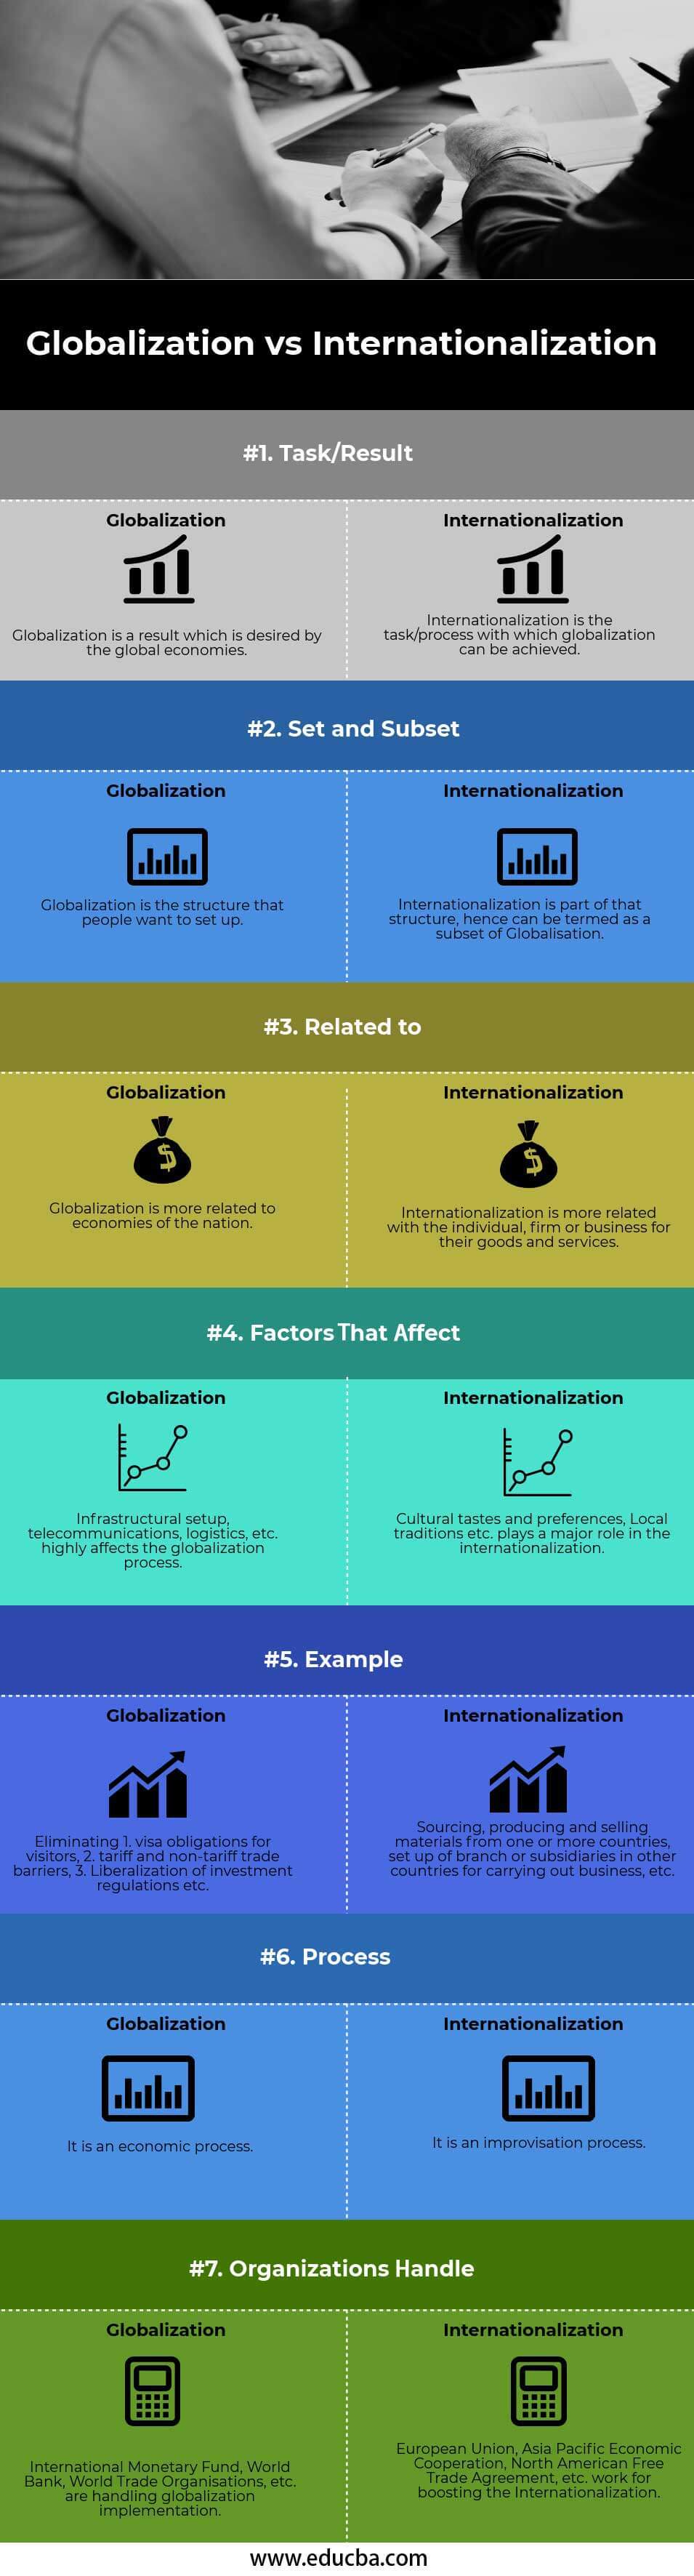 Globalization vs Internationalization-info